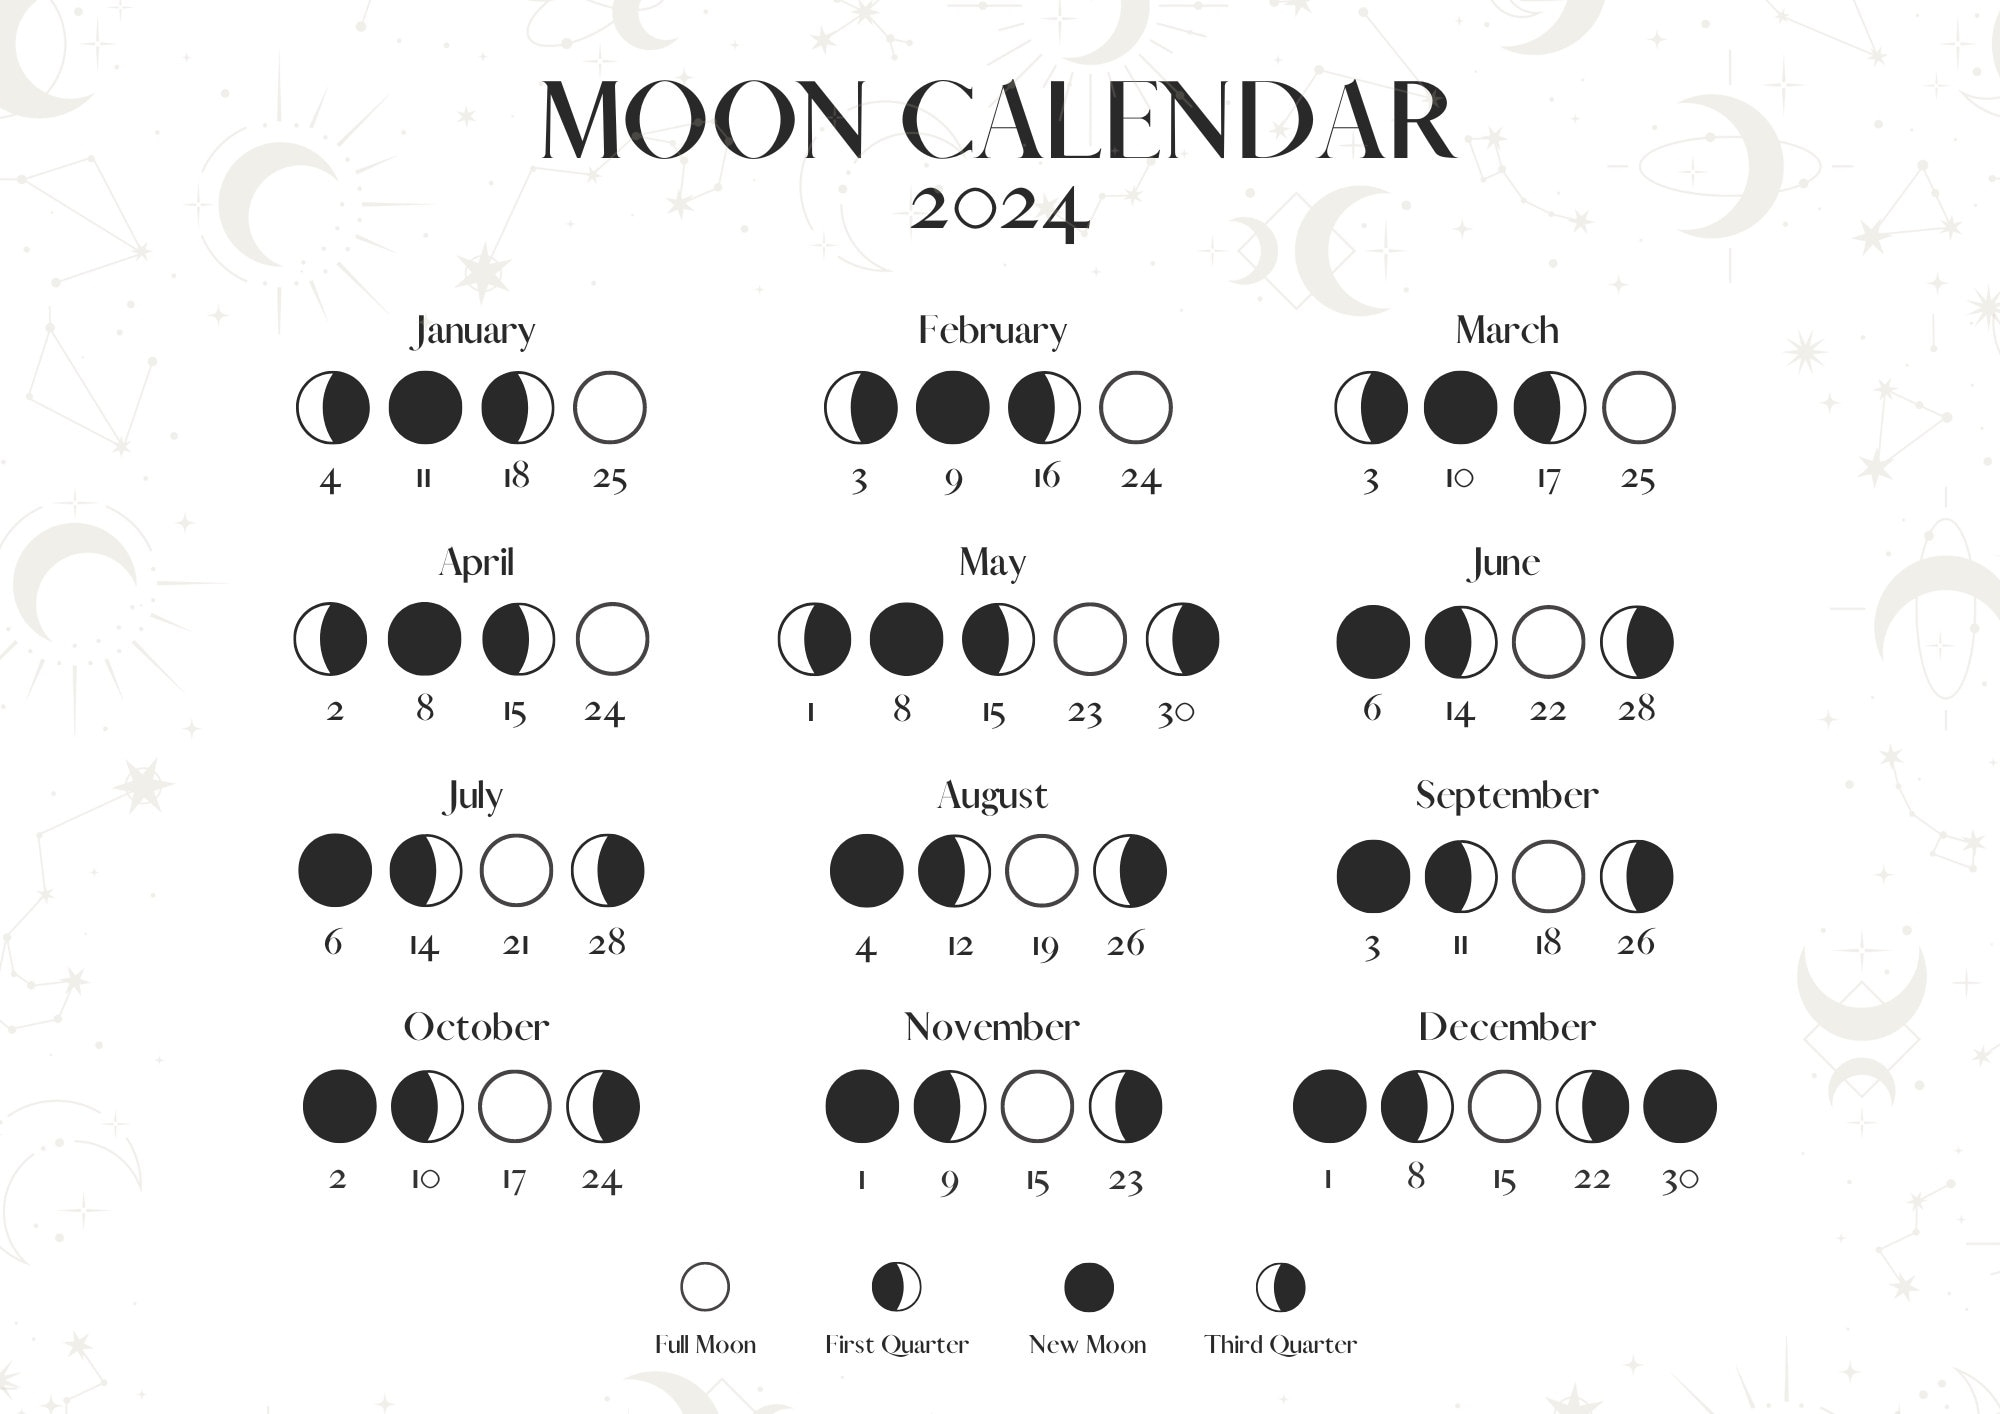 Moon Calendar 2024 Moon Phases Lunar Calendar Printable In A4 - Etsy for Moon Calendar 2024 Printable